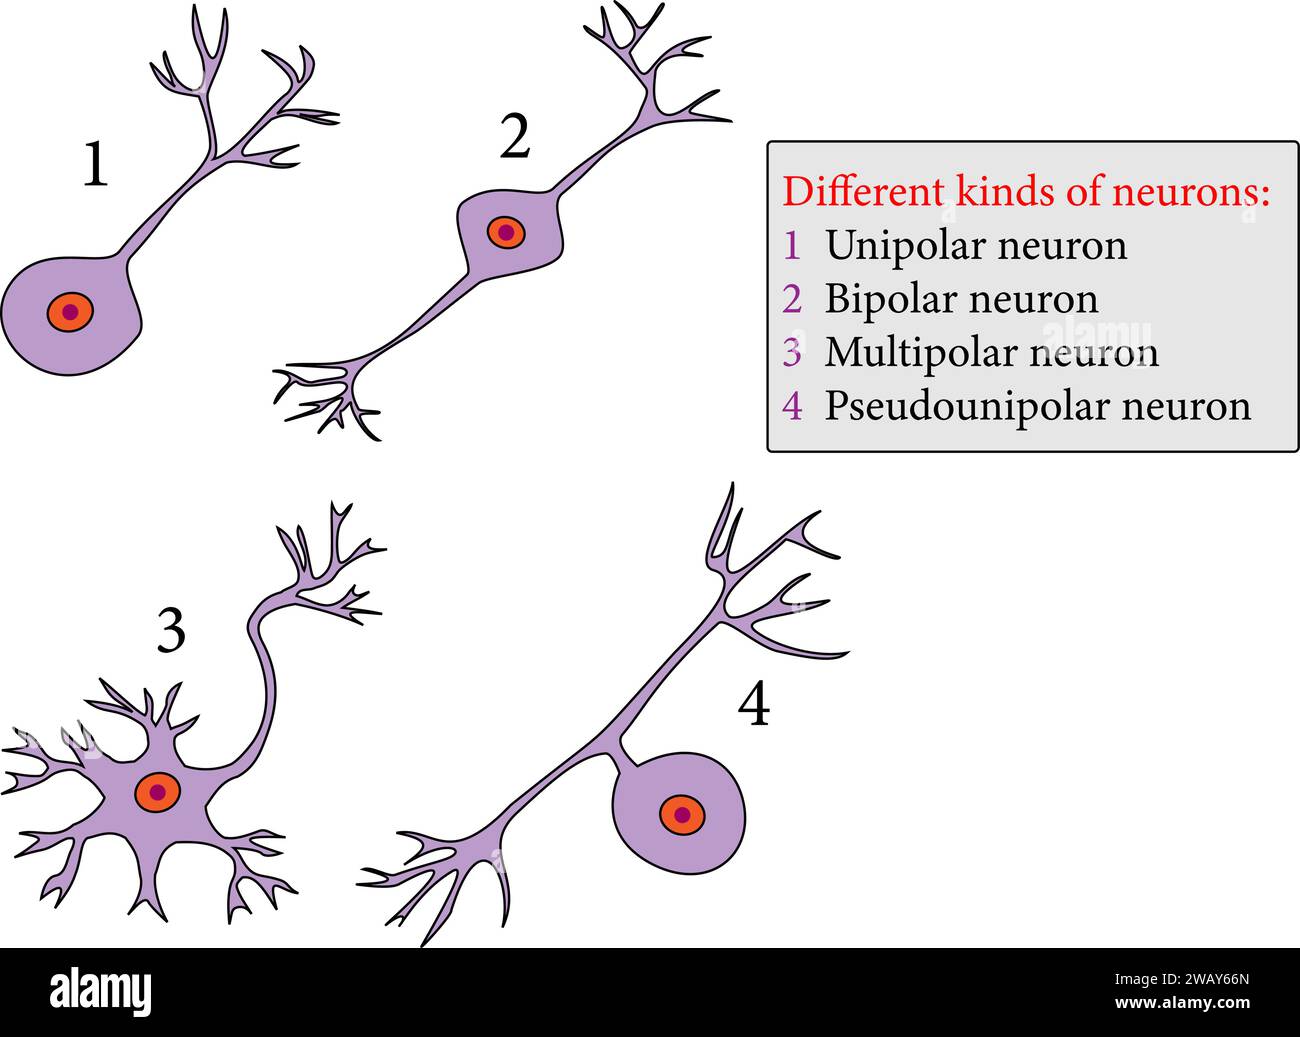 kinds of neurons: Unipolar neuron , Bipolar neuron , Multipolar neuron ,Pseudounipolar neuron.Vector illustration. Stock Vector